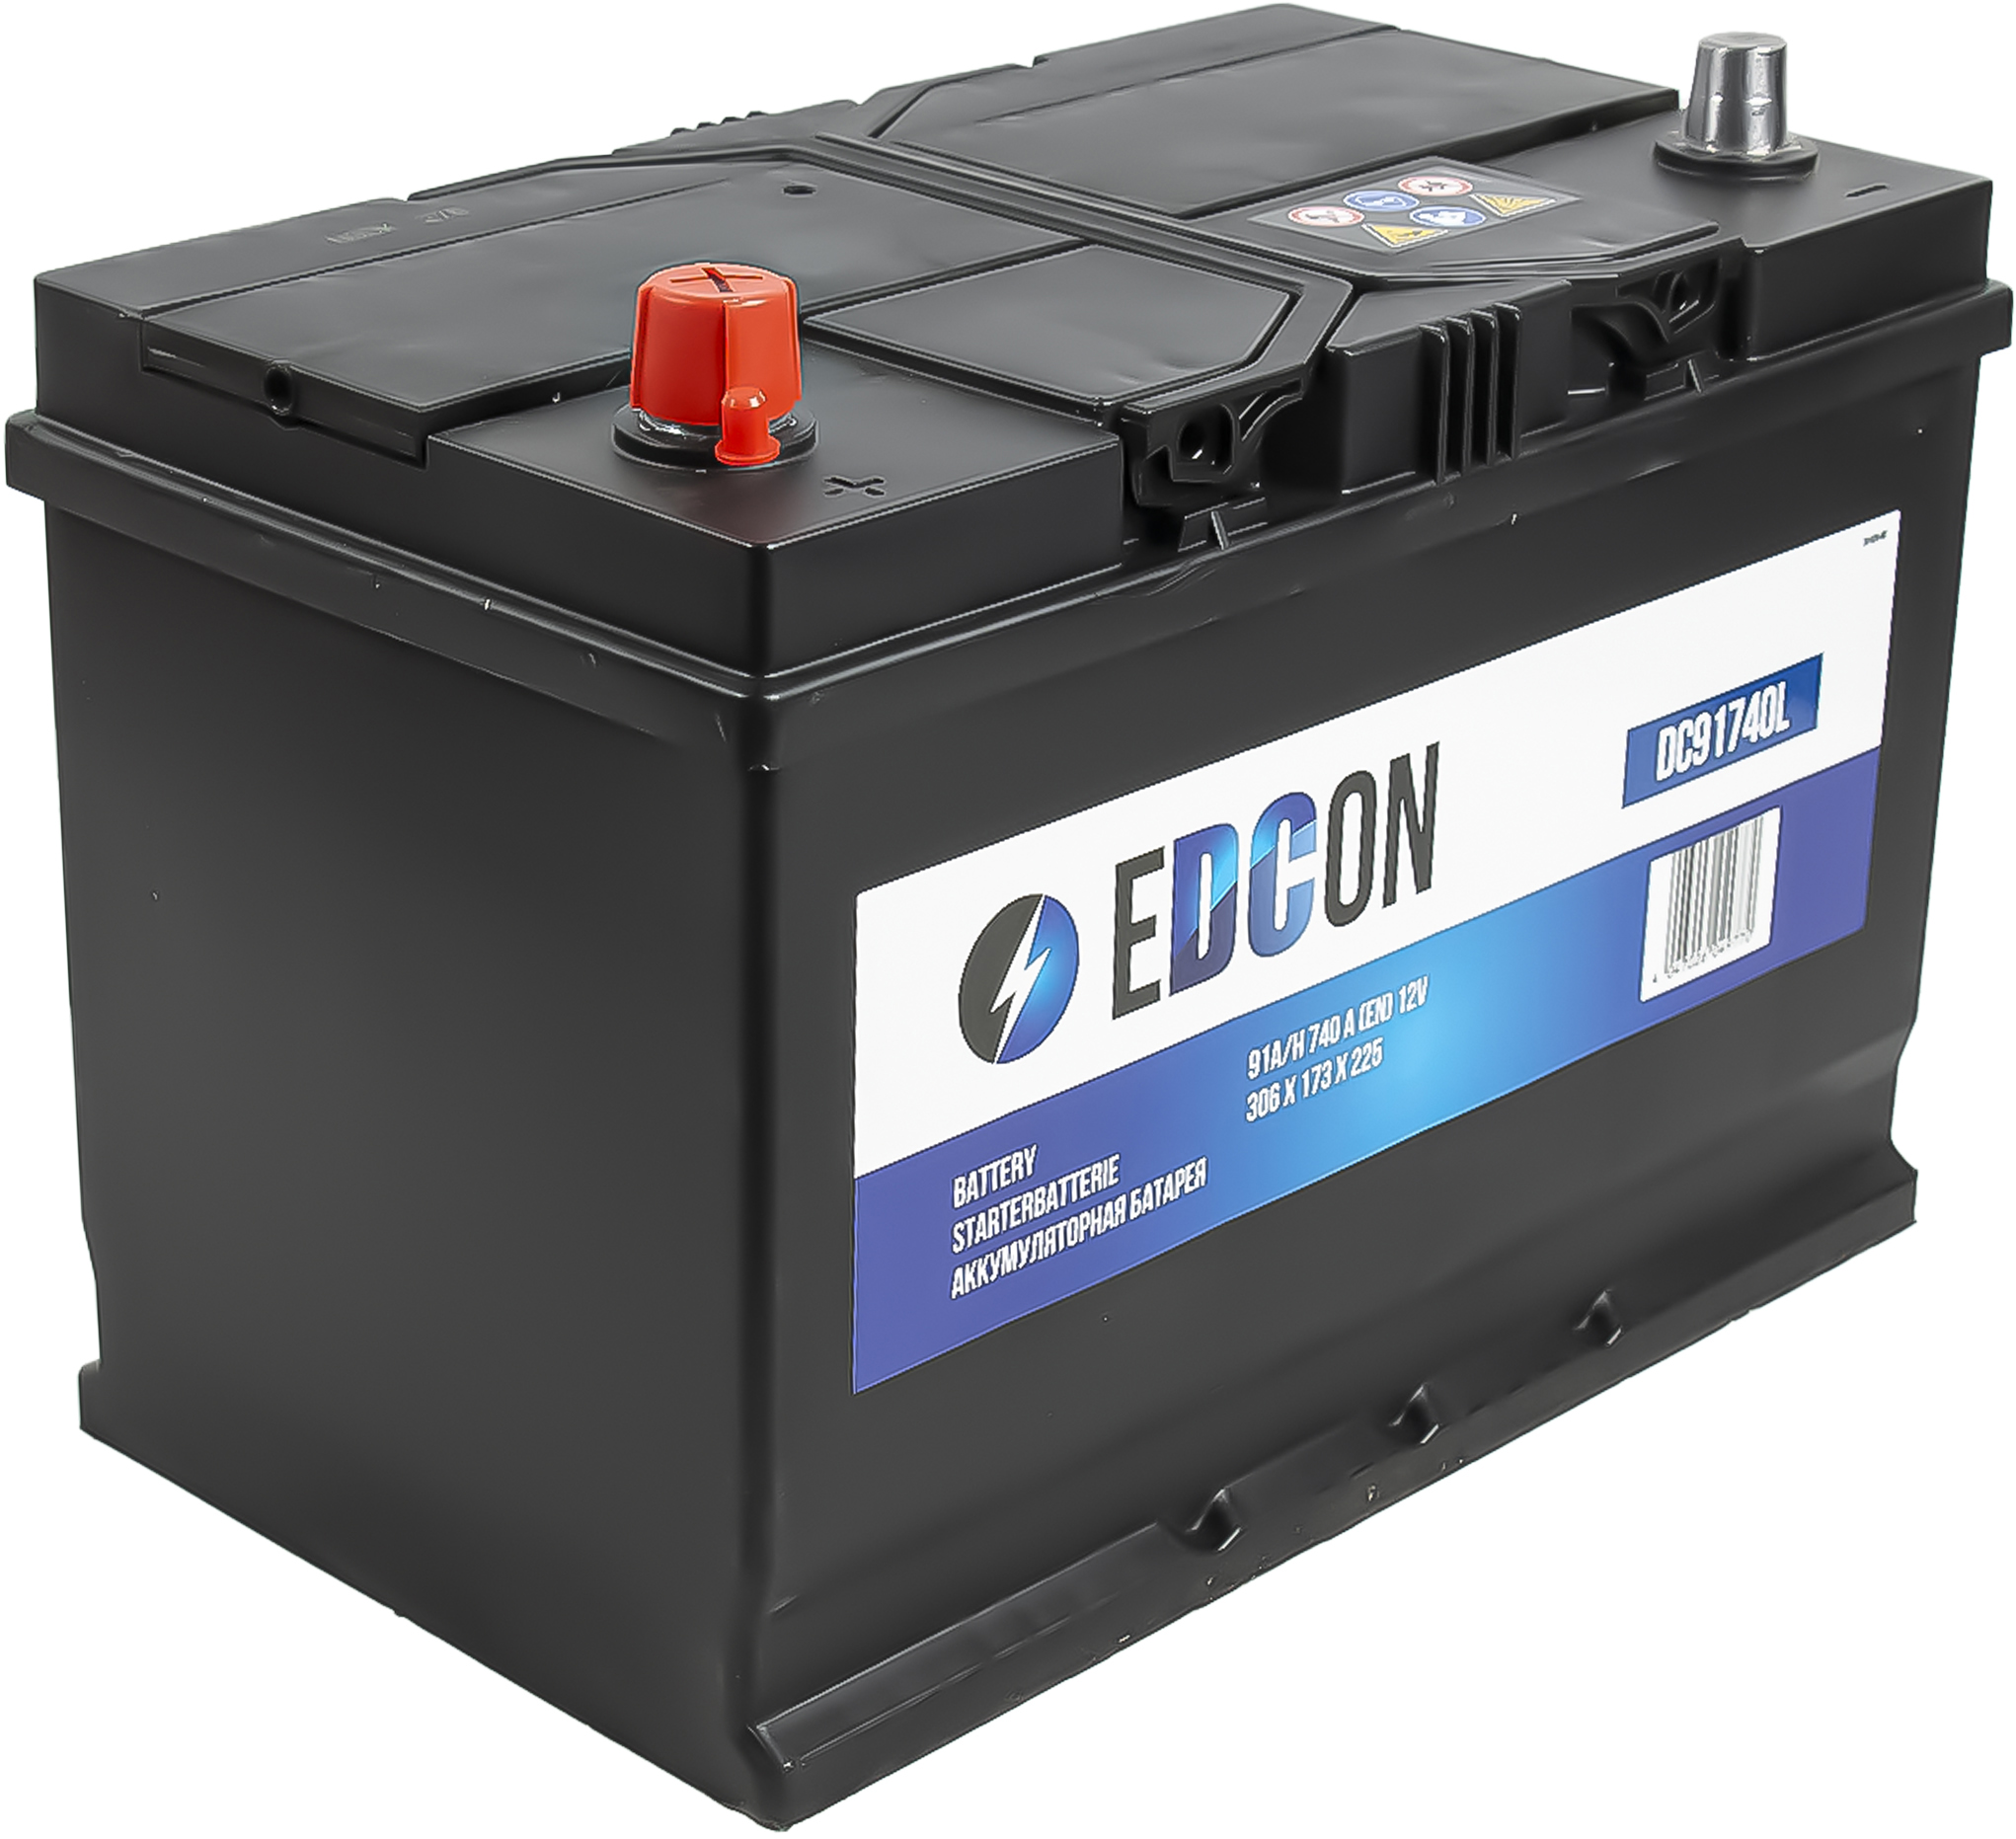 Аккумулятор EDCON DC91740L 91 Ач 740 А 306x173x225 мм 1 (+-) прямая